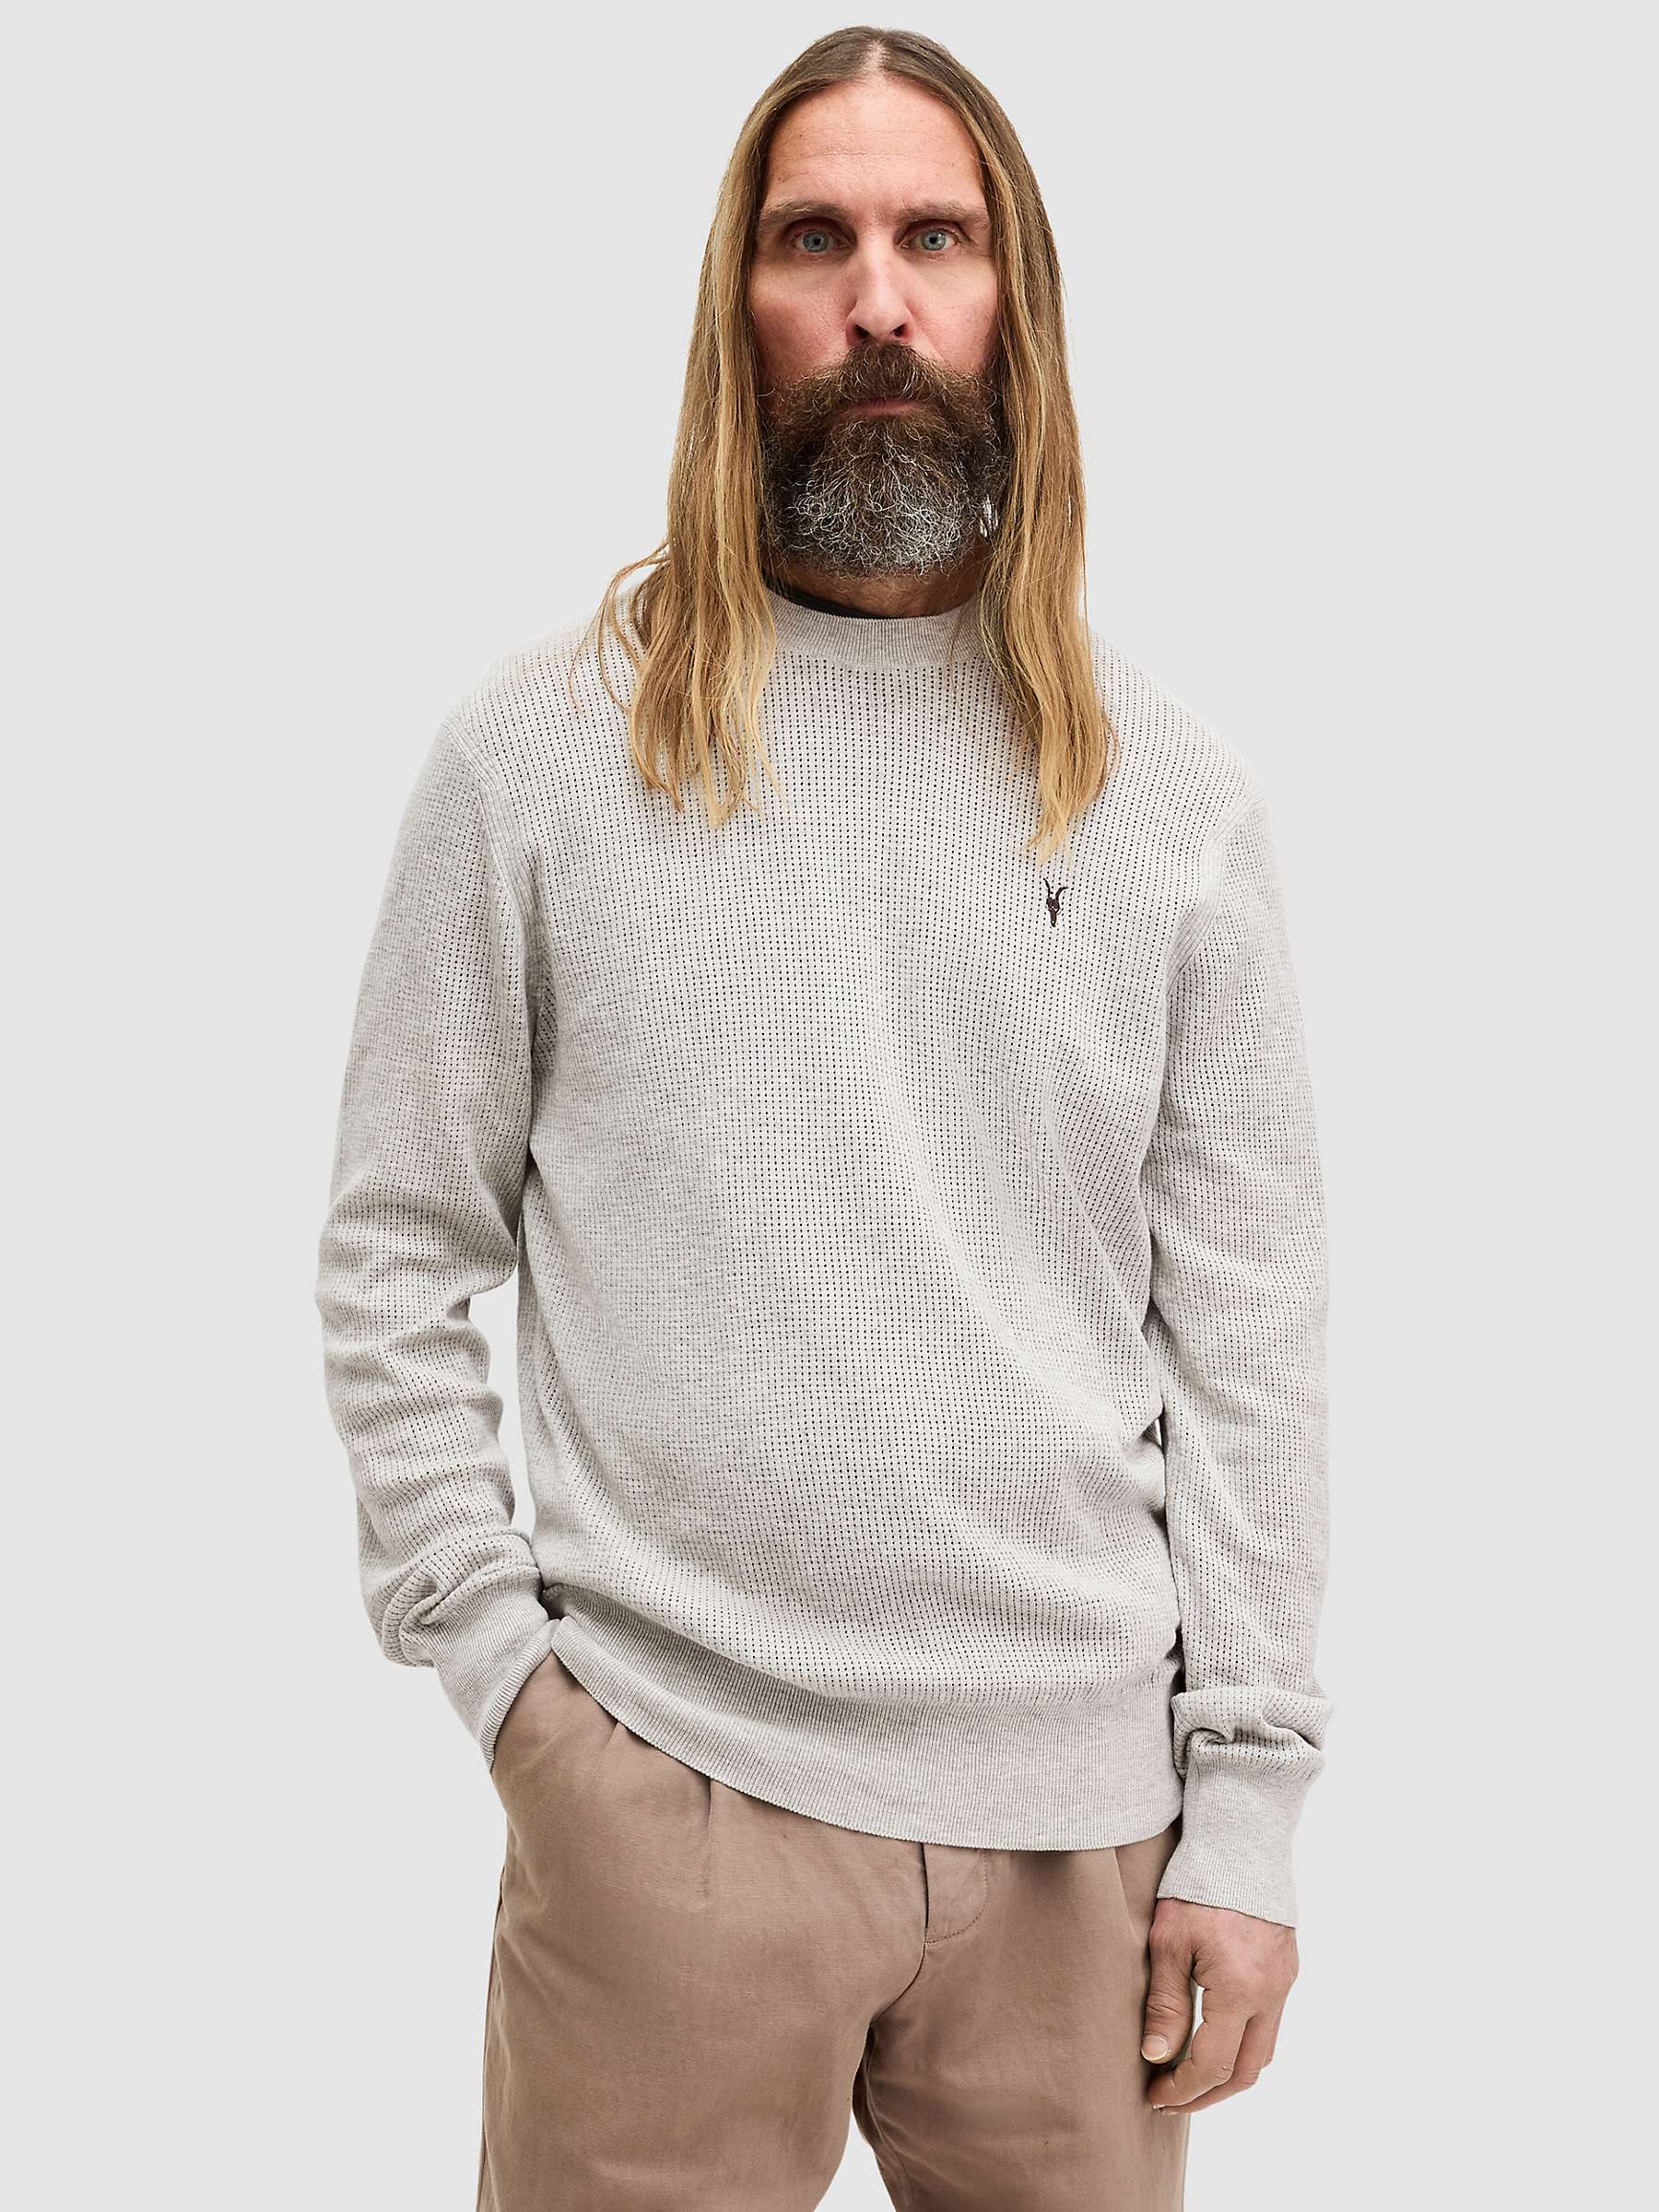 Buy AllSaints Aubrey Organic Cotton Crew Neck Sweatshirt, Grey Marl Online at johnlewis.com